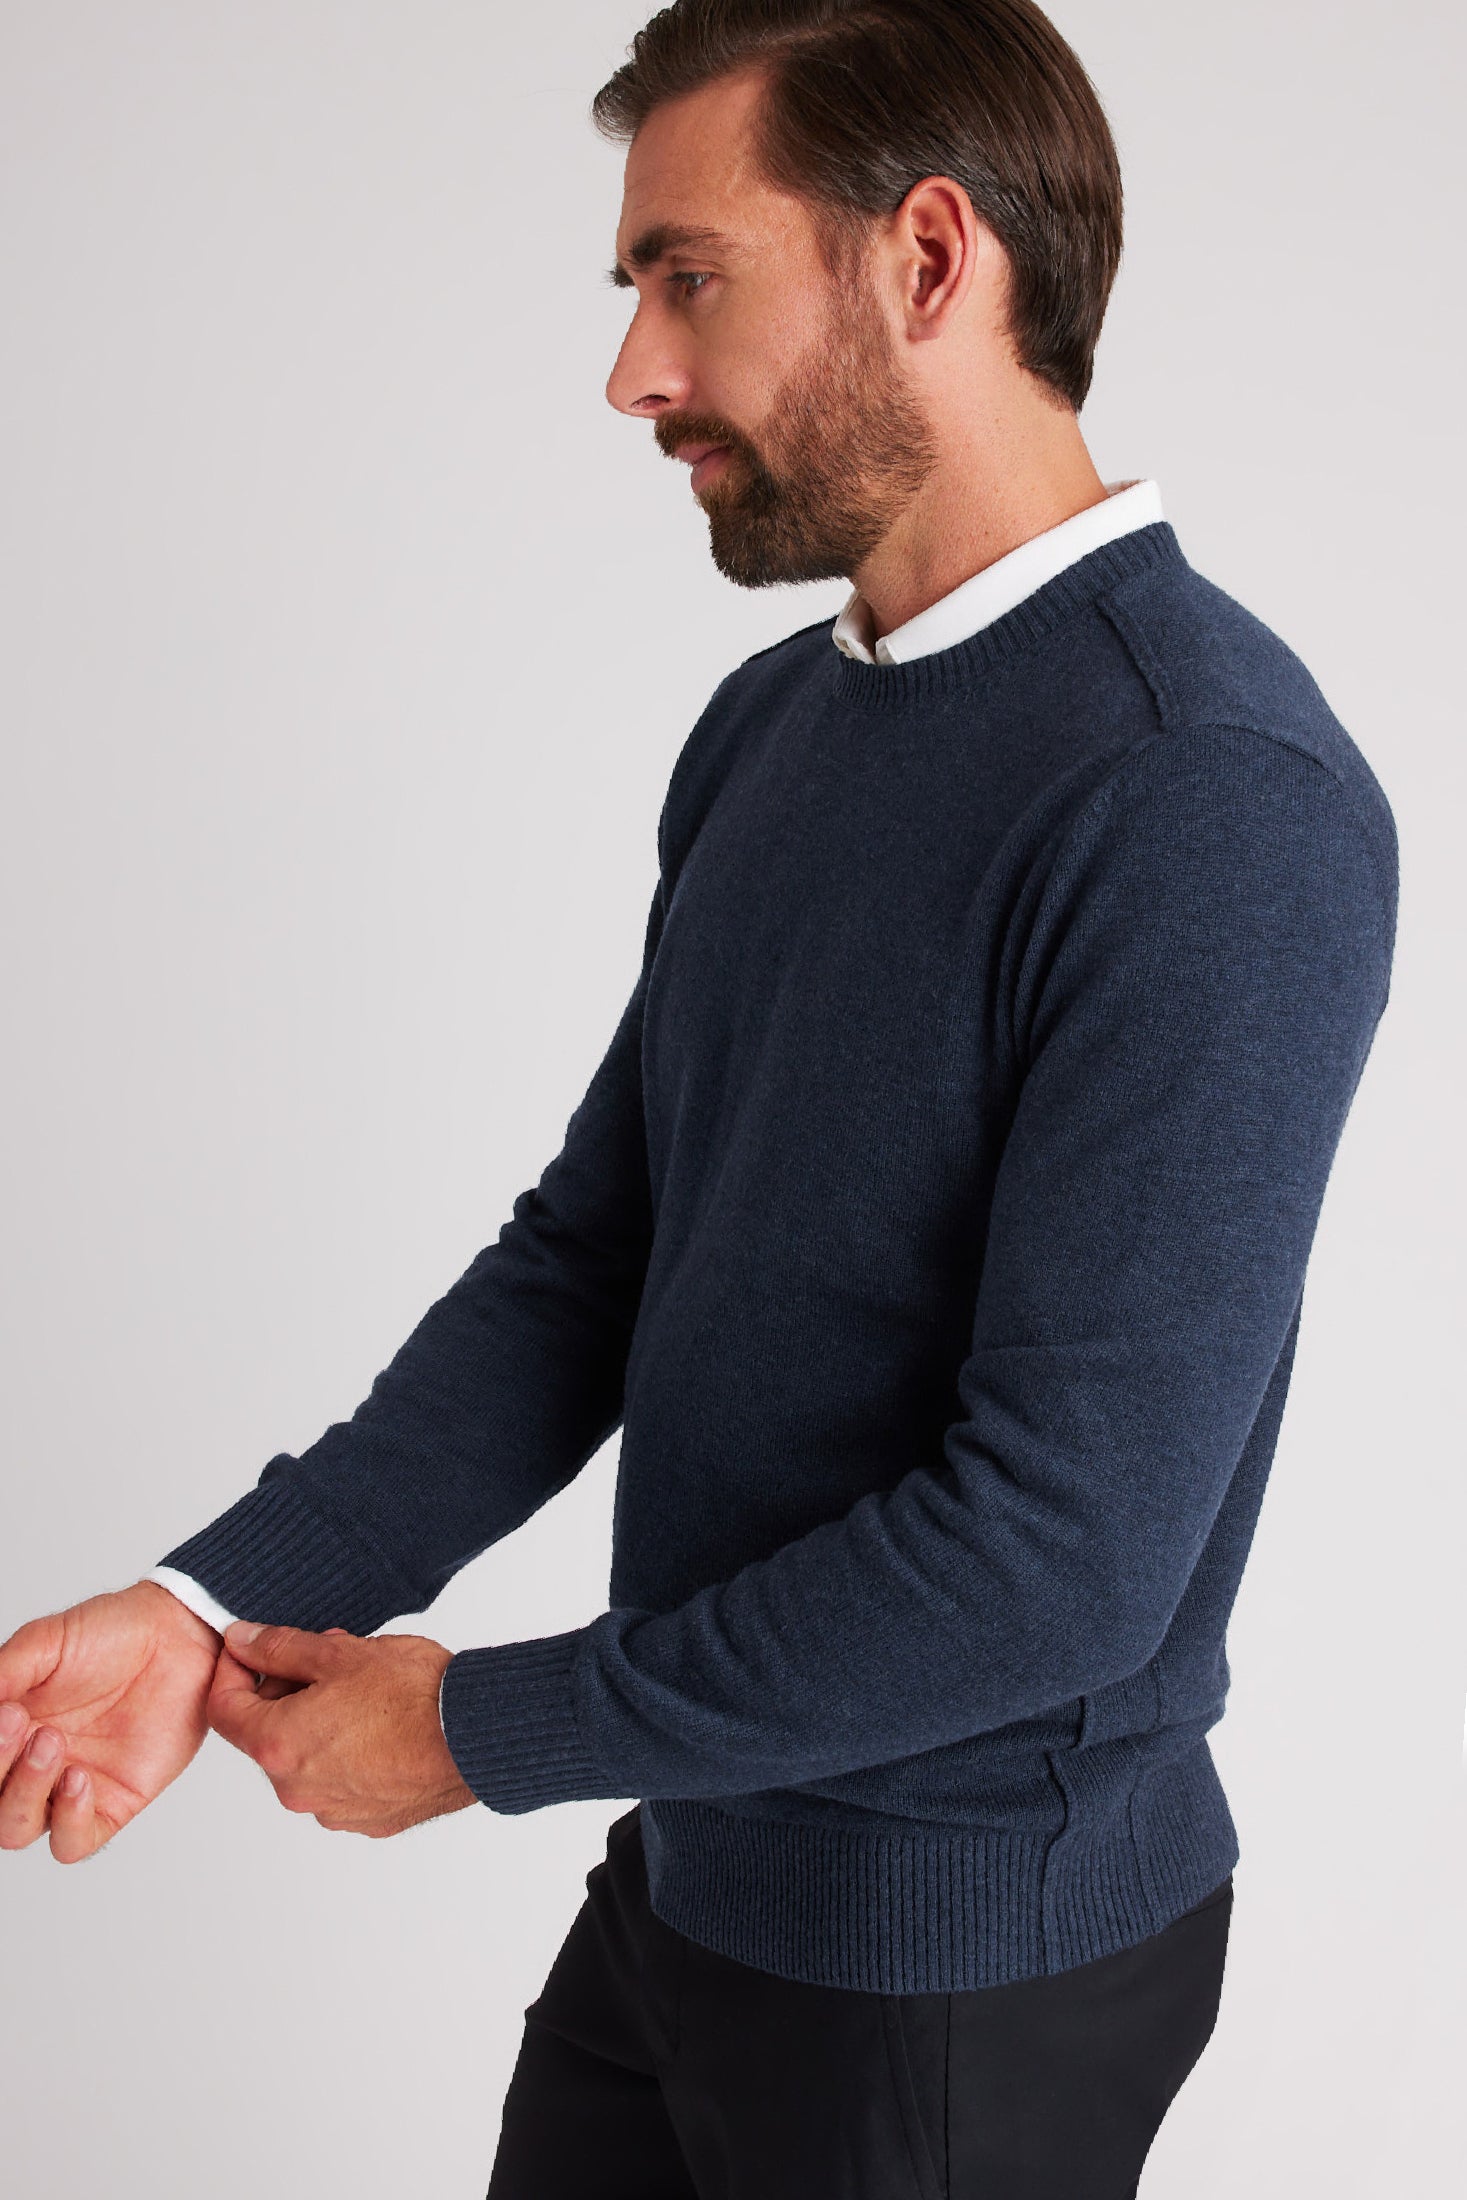 Uplift Merino Sweater | Men's Sweaters – Kit and Ace